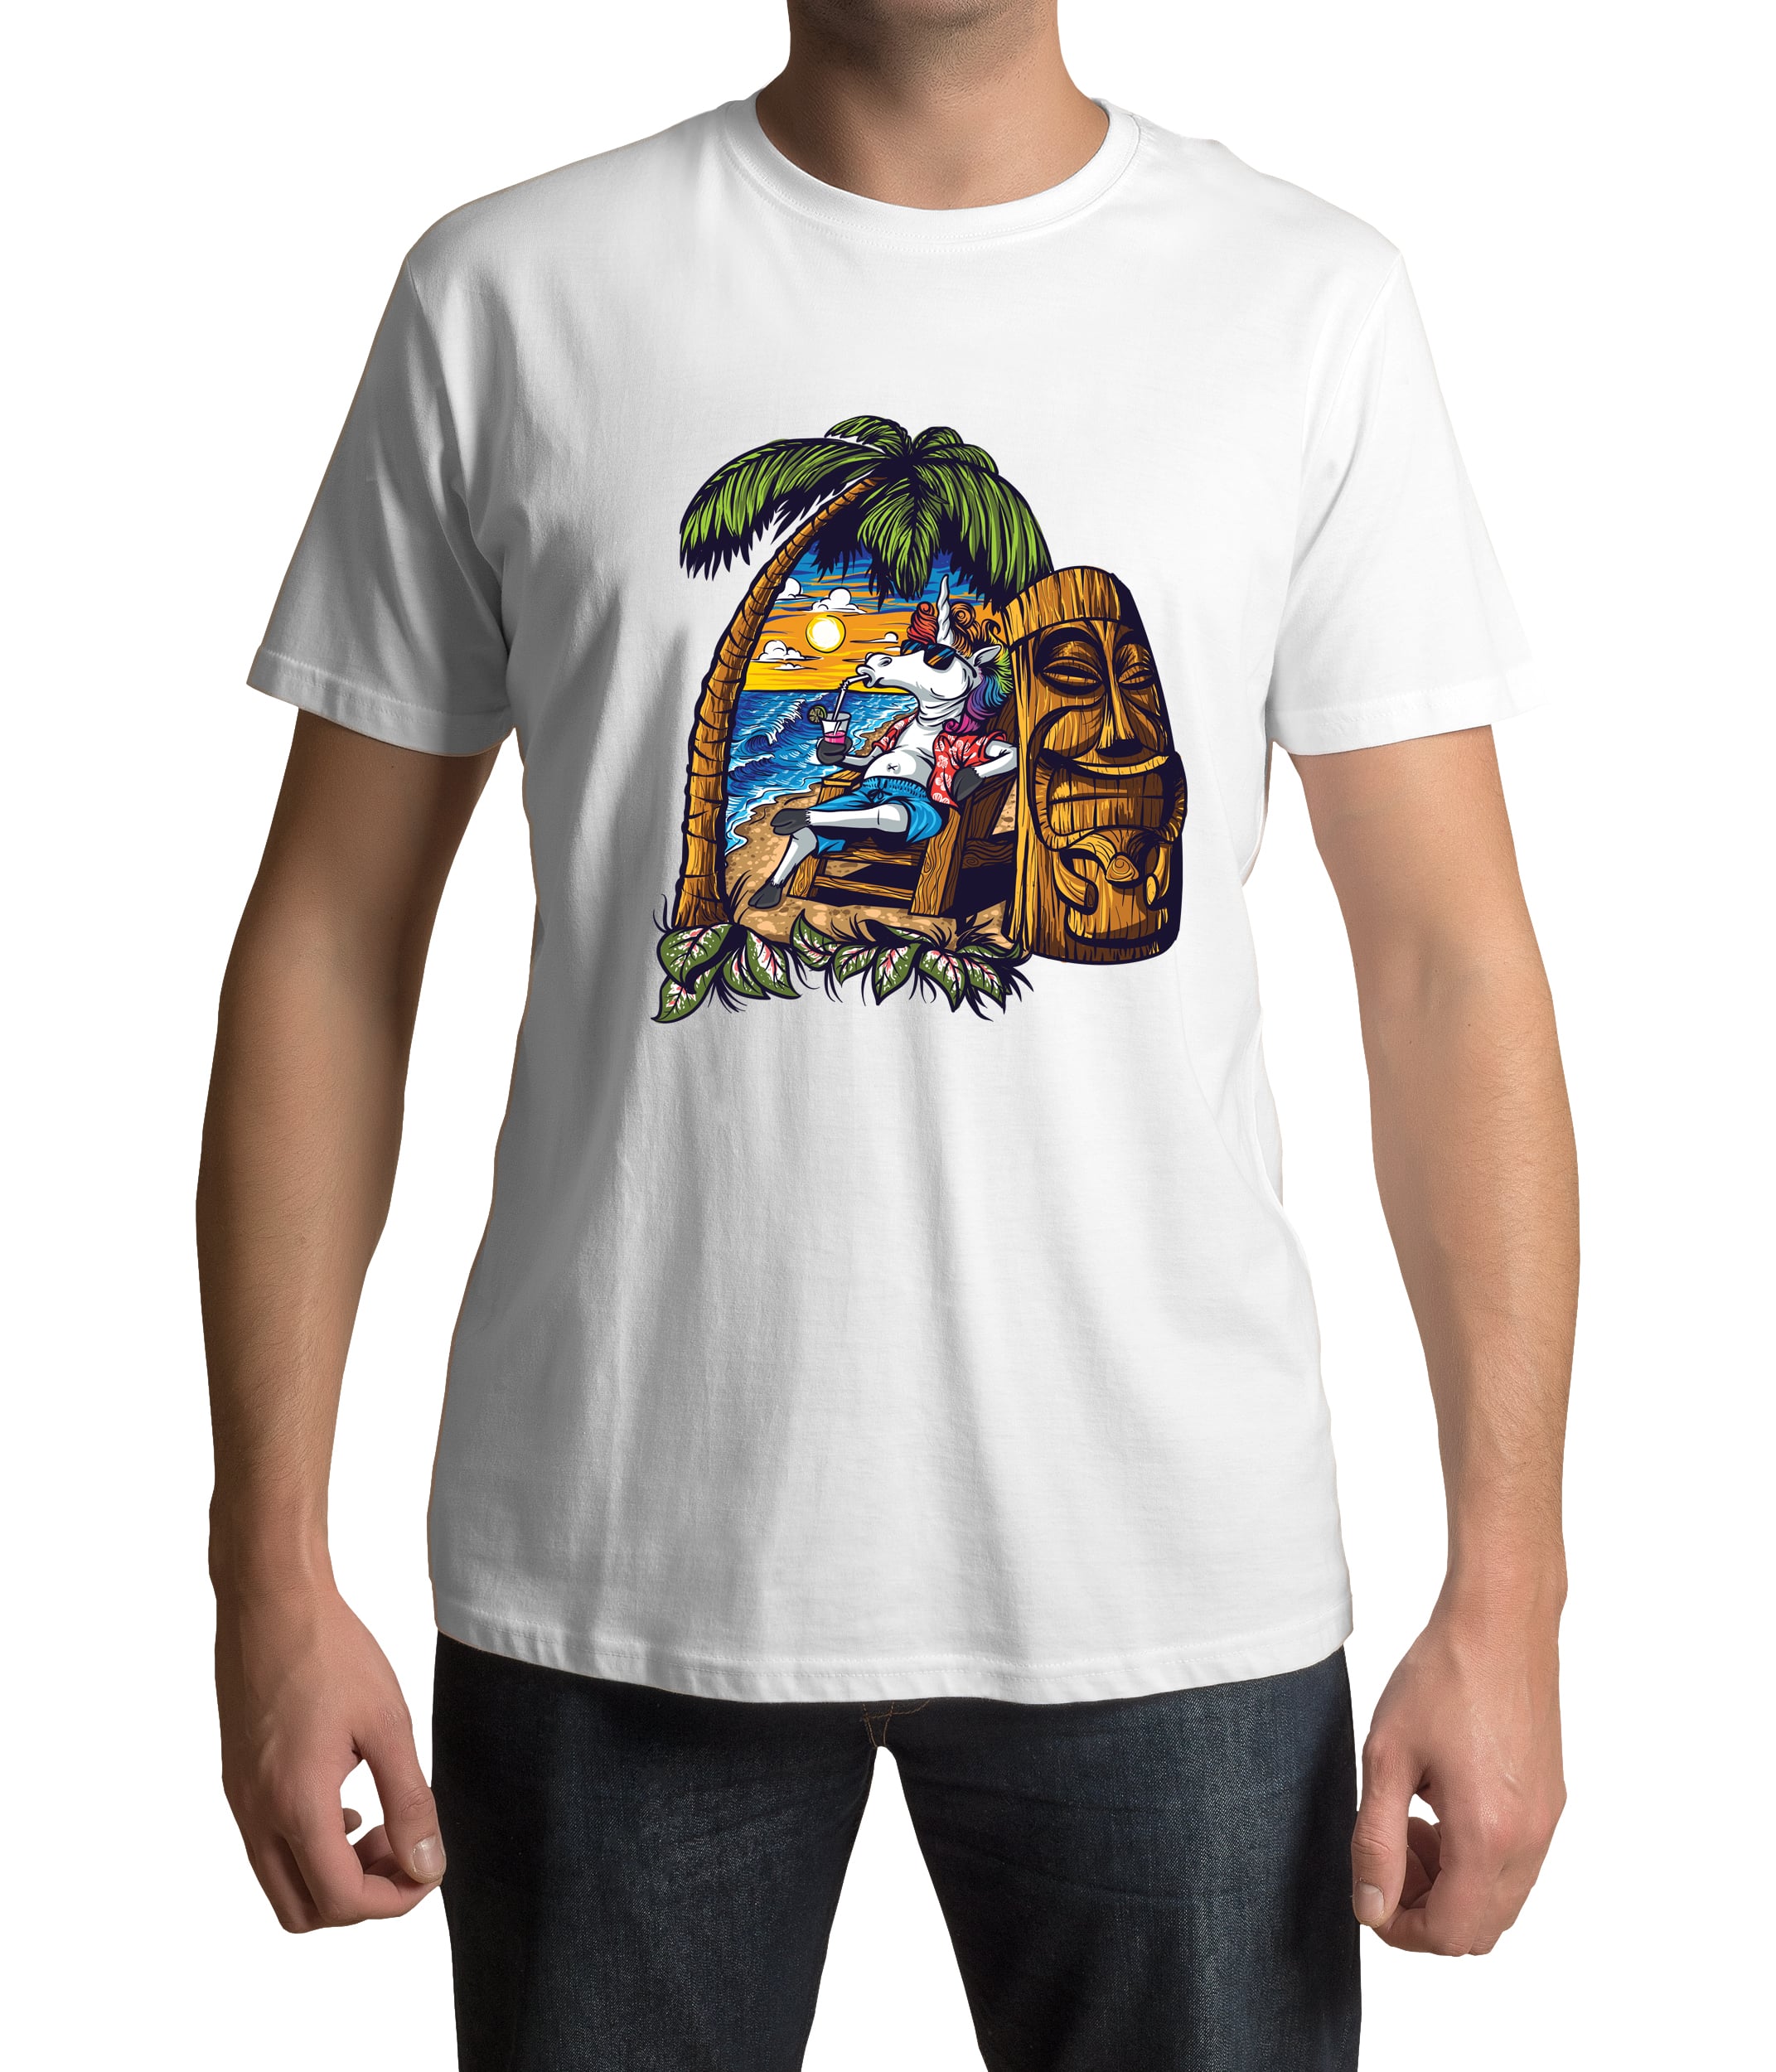 Tiki Life T-Shirt Product Image